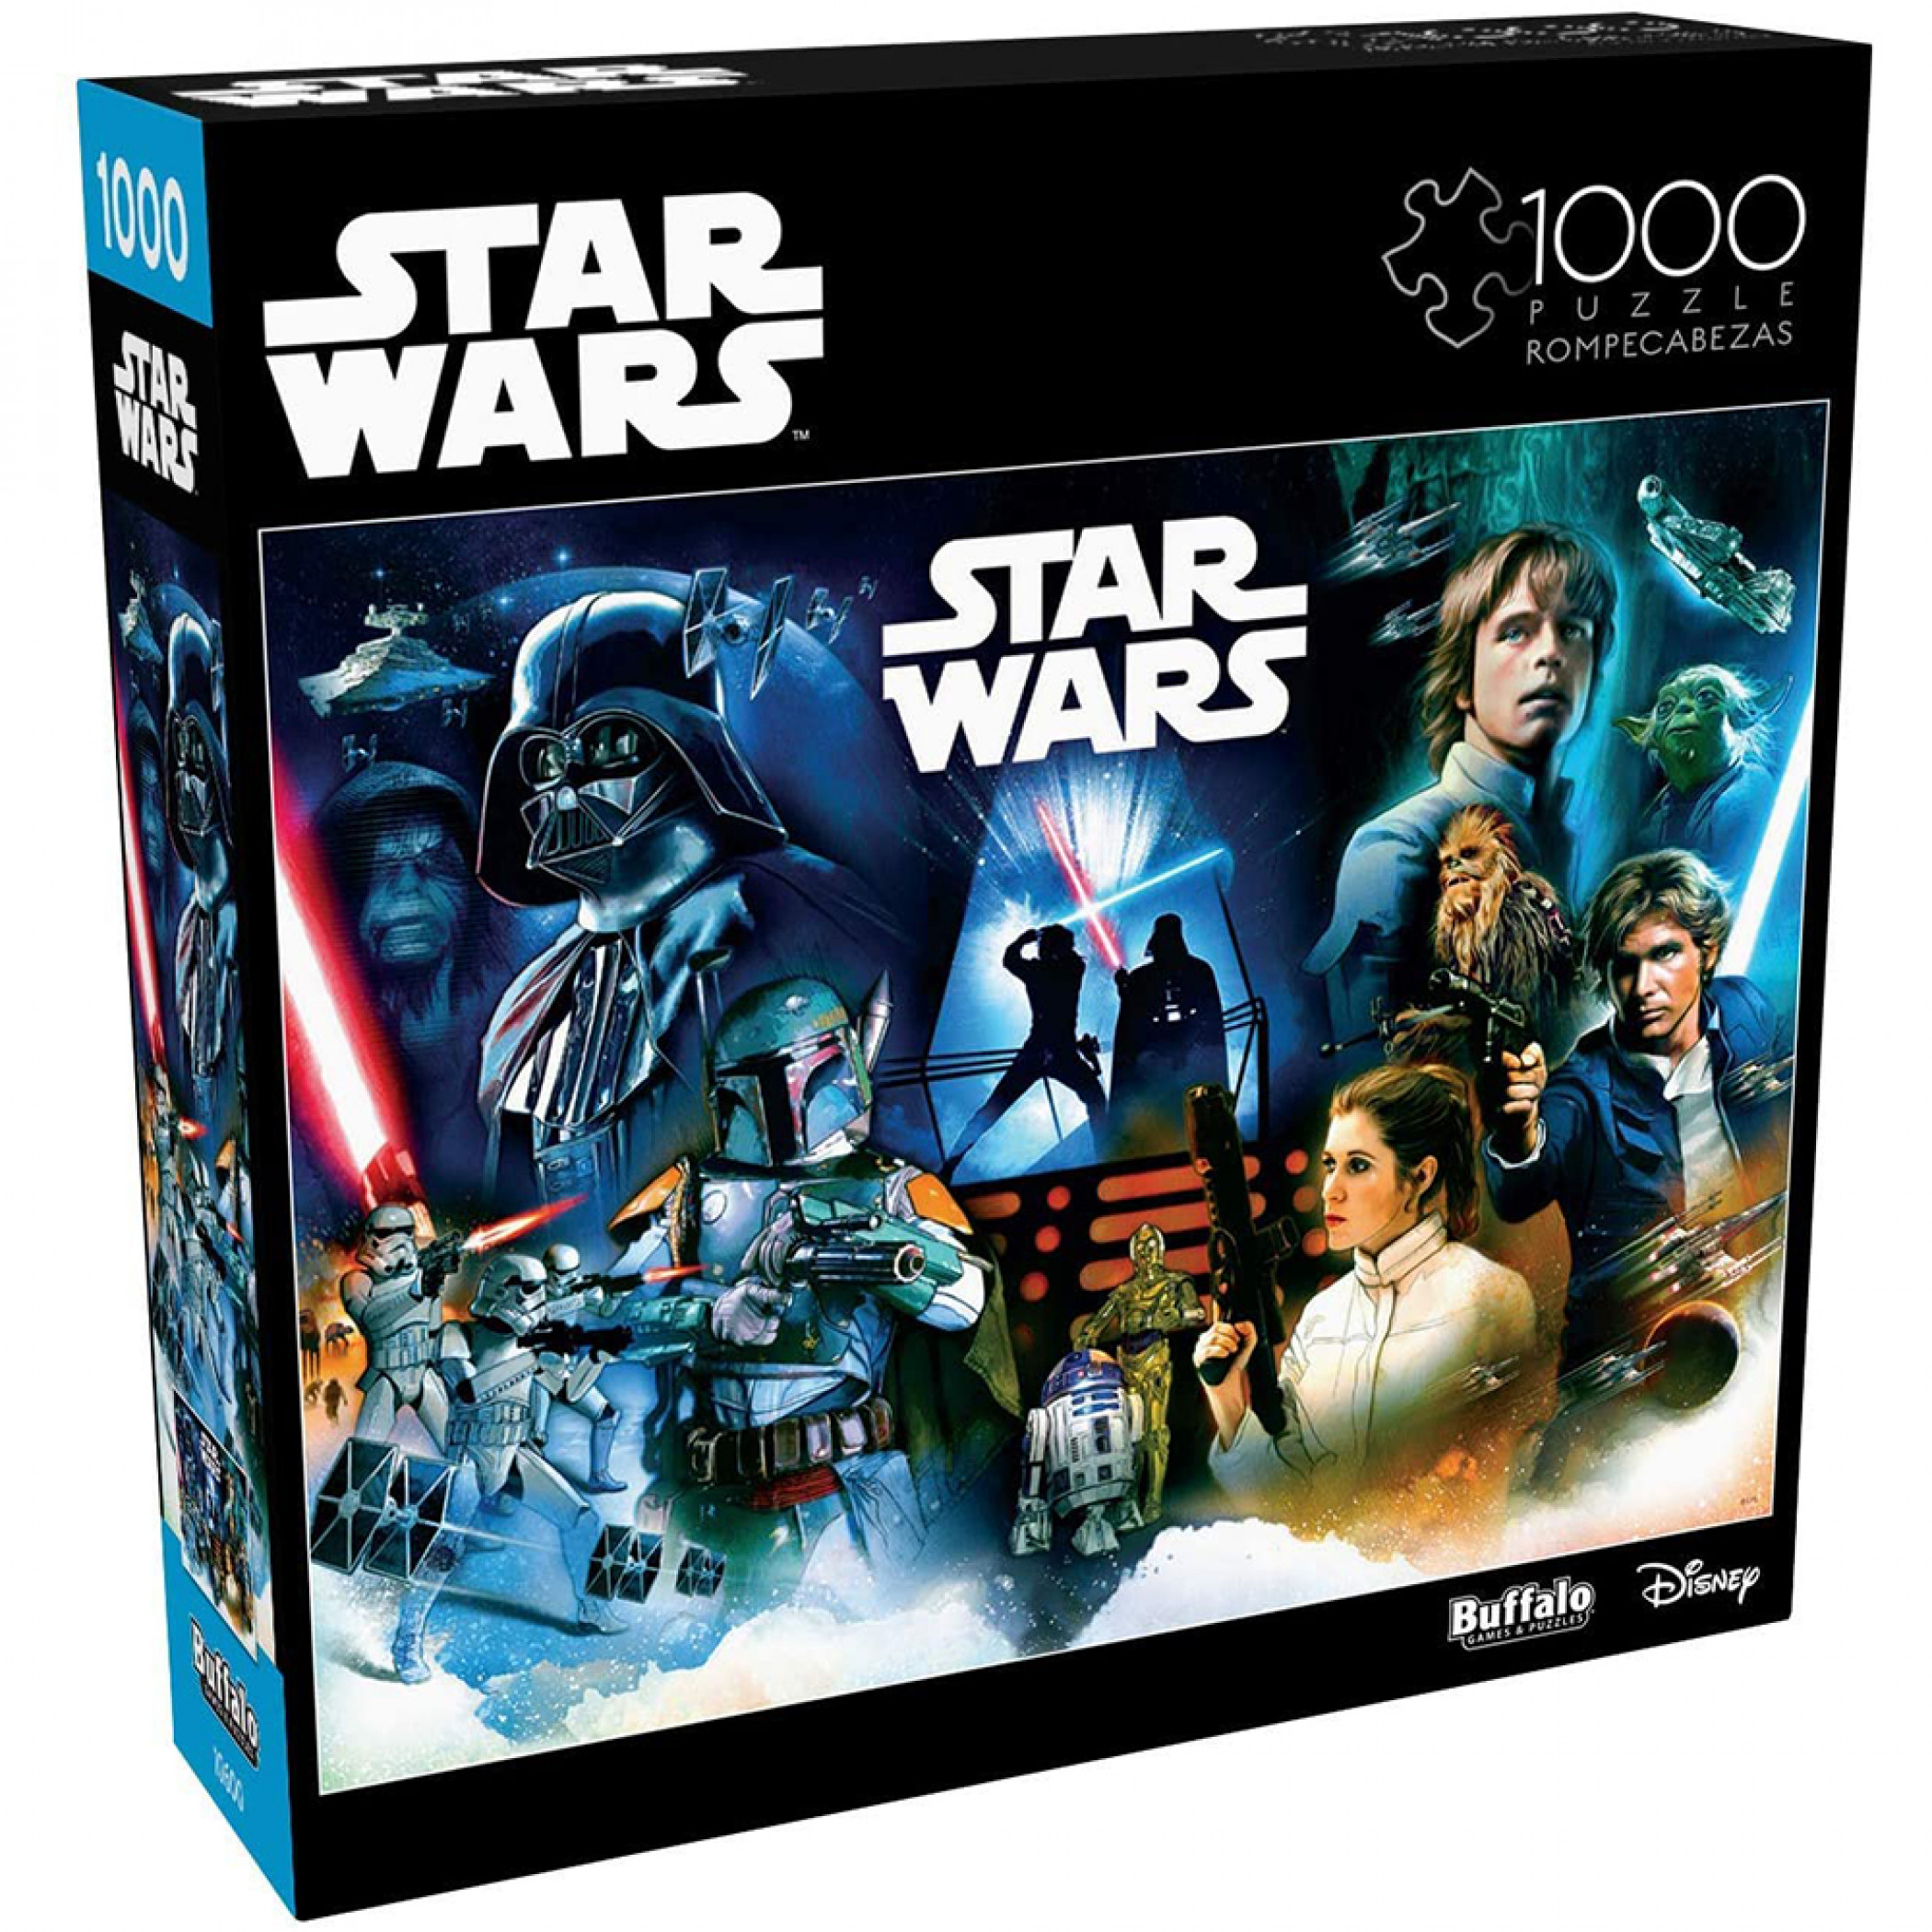 Star Wars Return Of The Jedi Collage 1000 Piece Jigsaw Puzzle